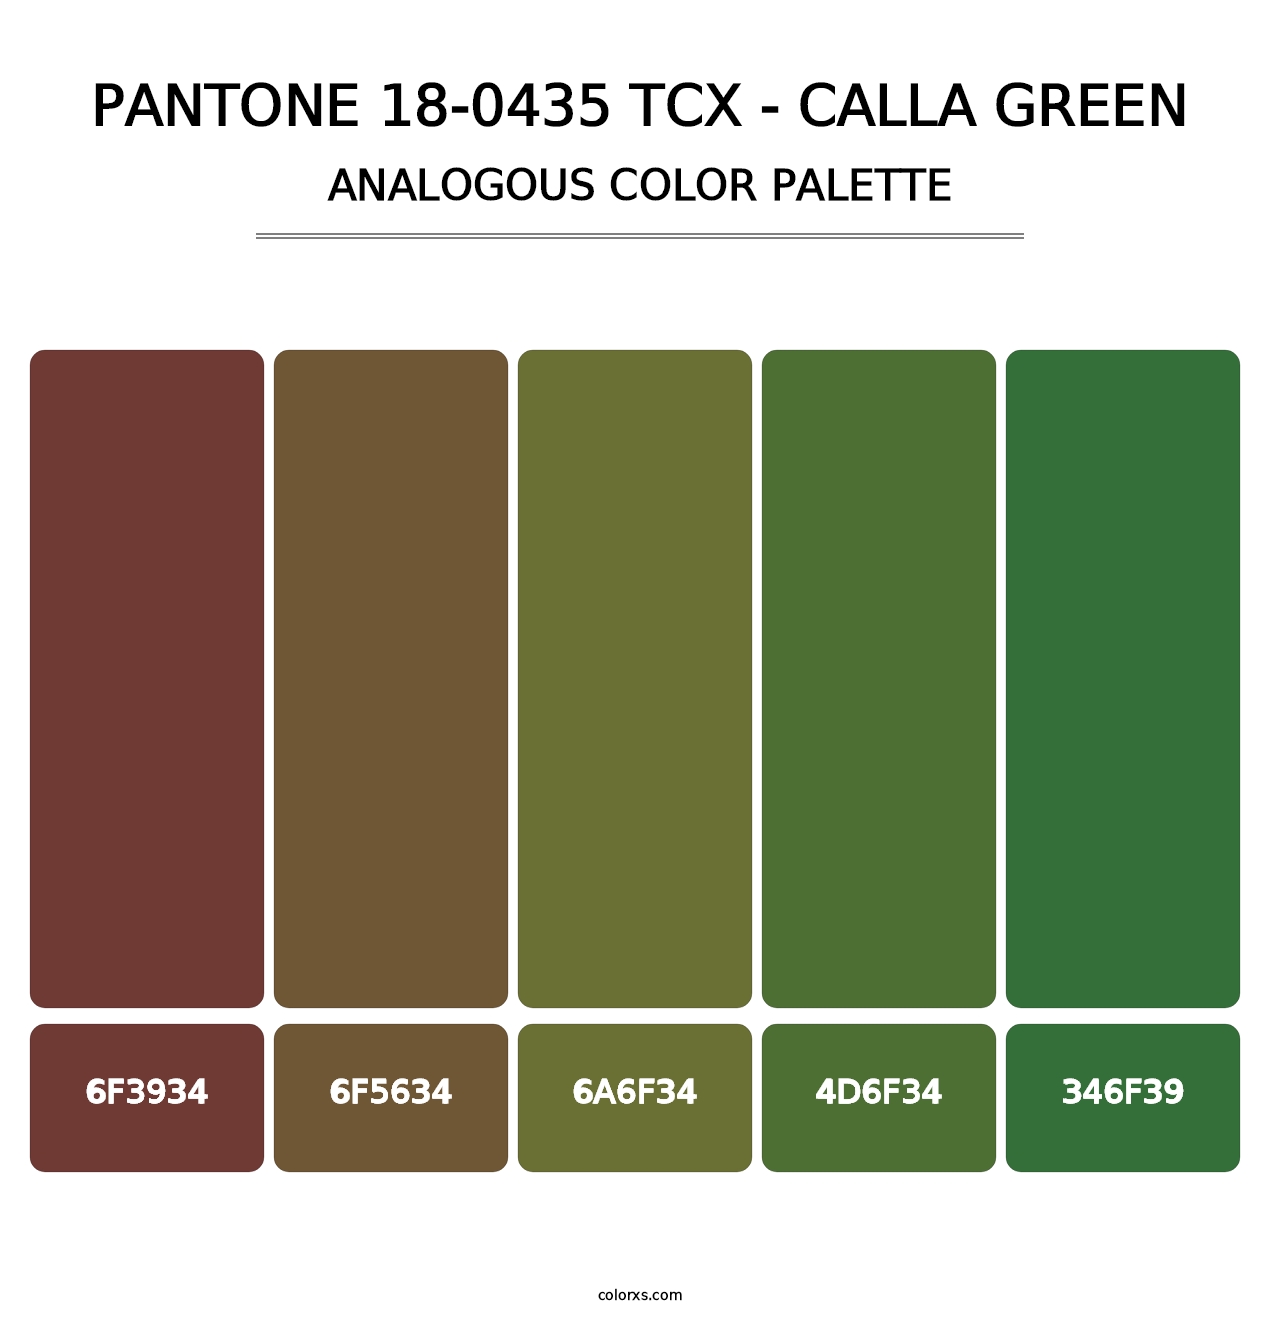 PANTONE 18-0435 TCX - Calla Green - Analogous Color Palette